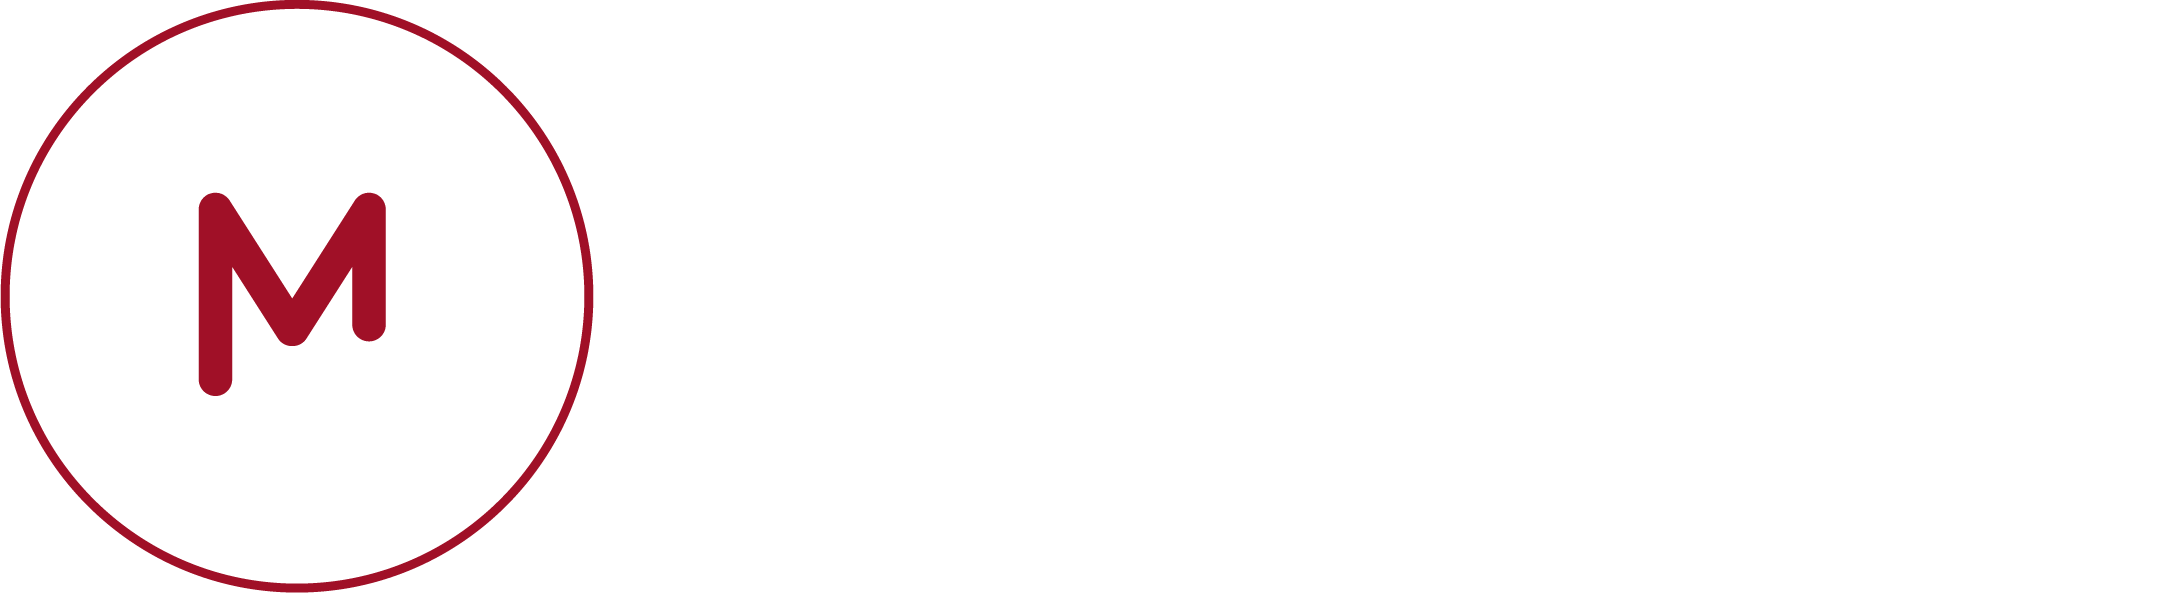 Montagge